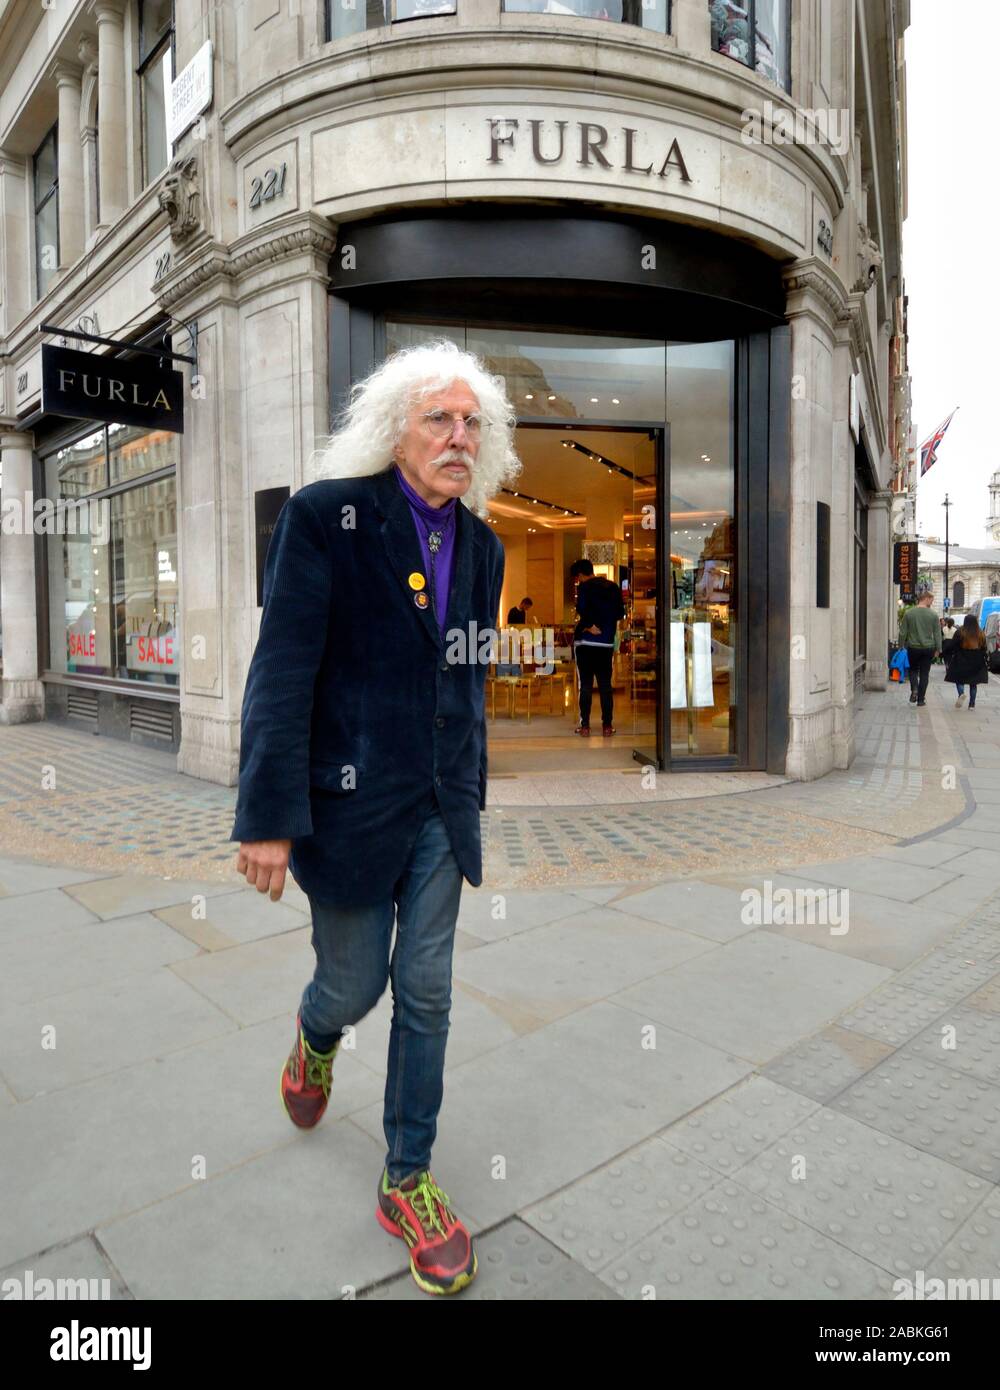 London, England, UK. Older man with long white hair walking past Furla store in Regent Street Stock Photo